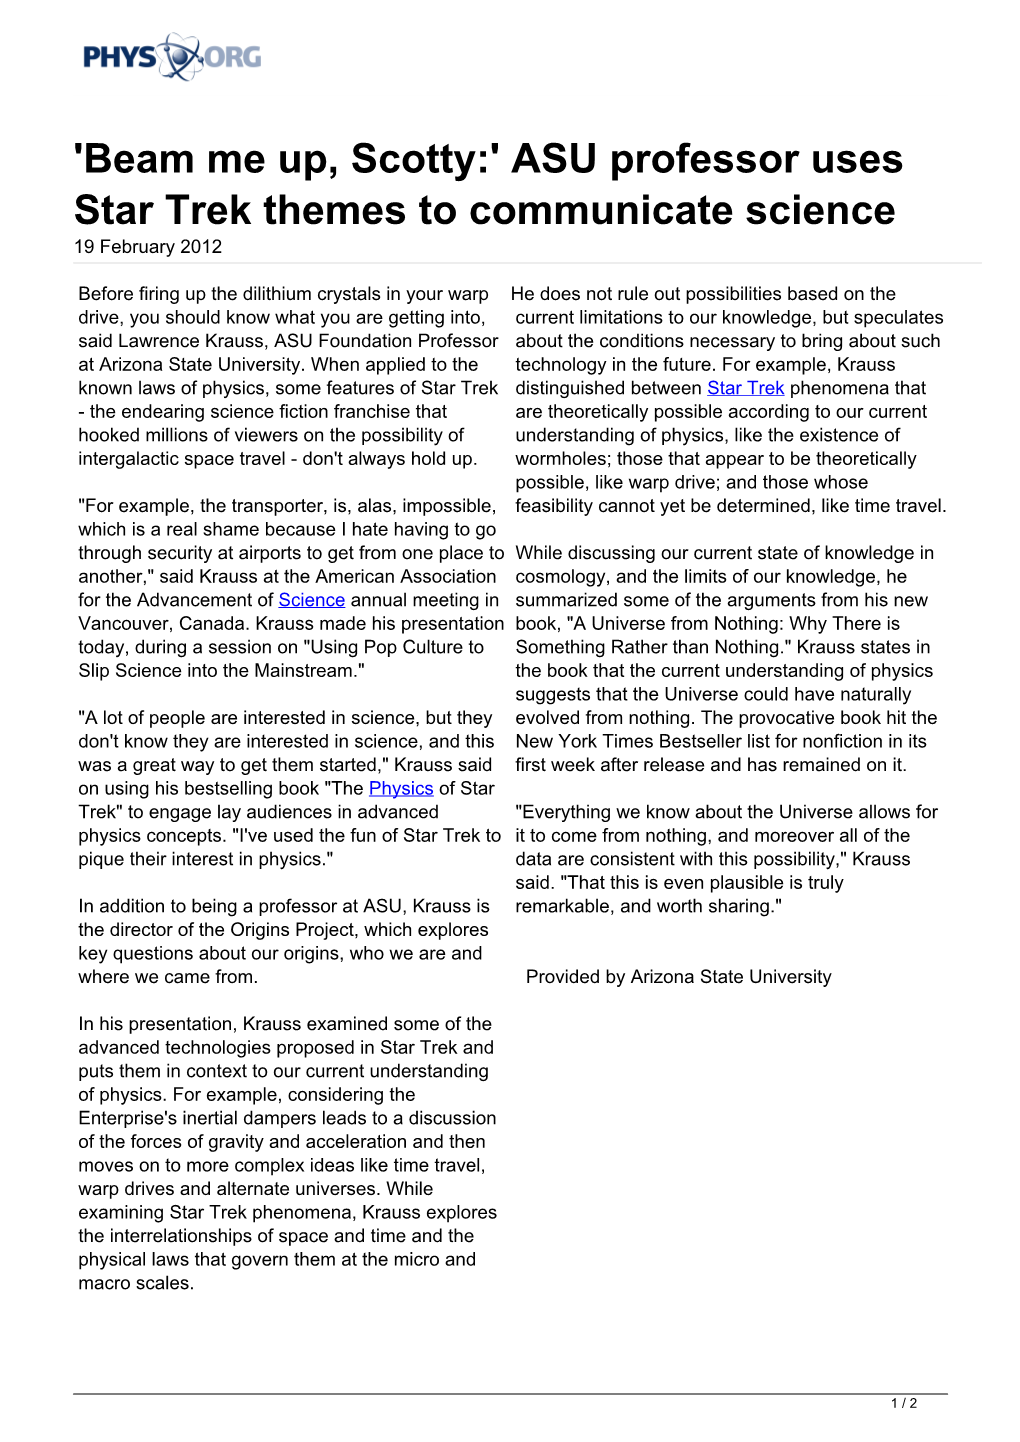 ASU Professor Uses Star Trek Themes to Communicate Science 19 February 2012